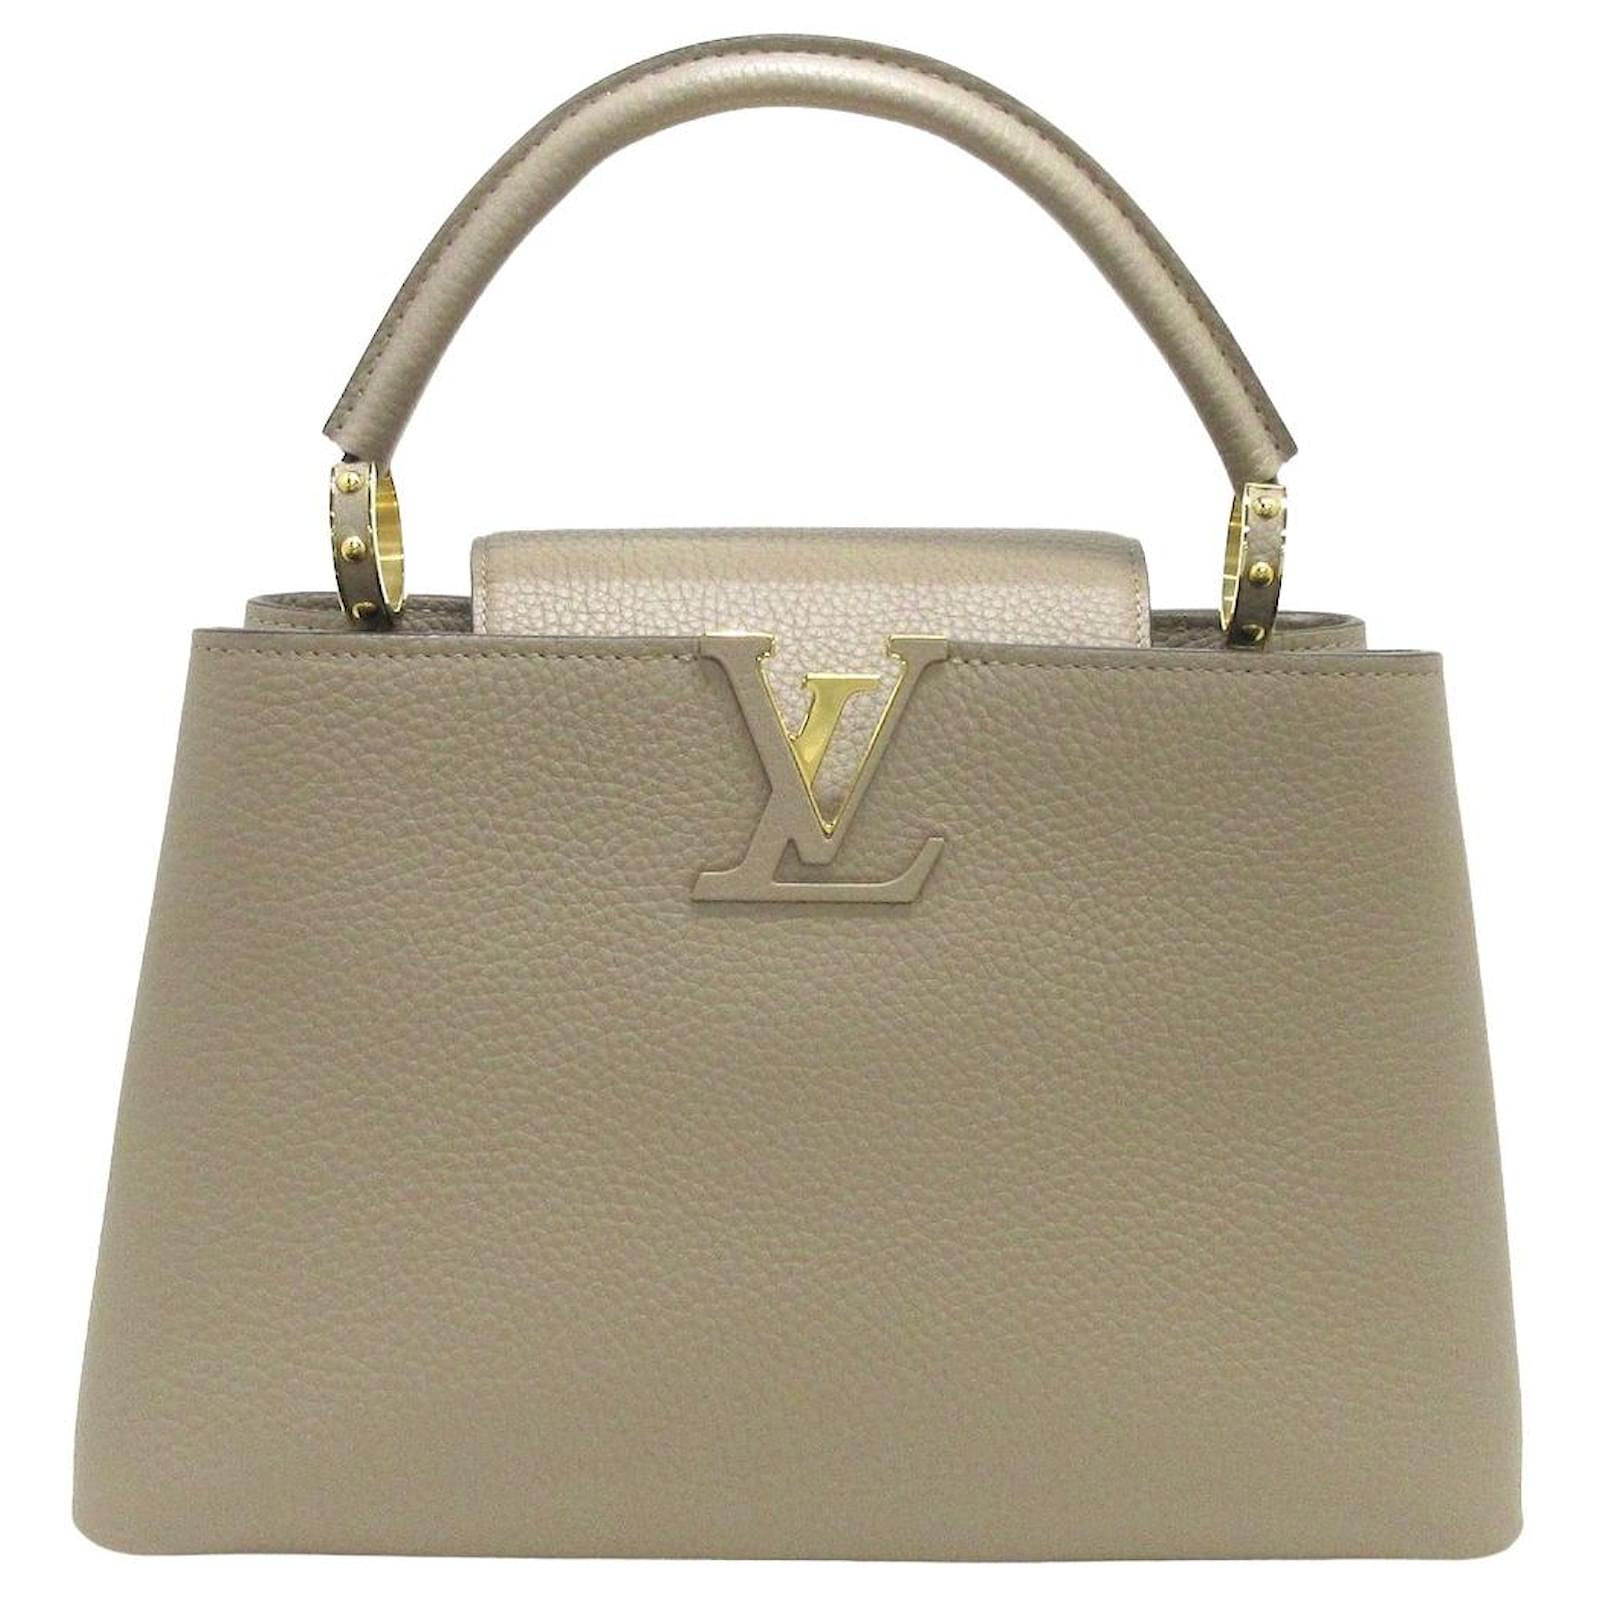 Handbags Louis Vuitton Capucines mm Shoulder Bag in Beige Raffia and Black Leather - 101221